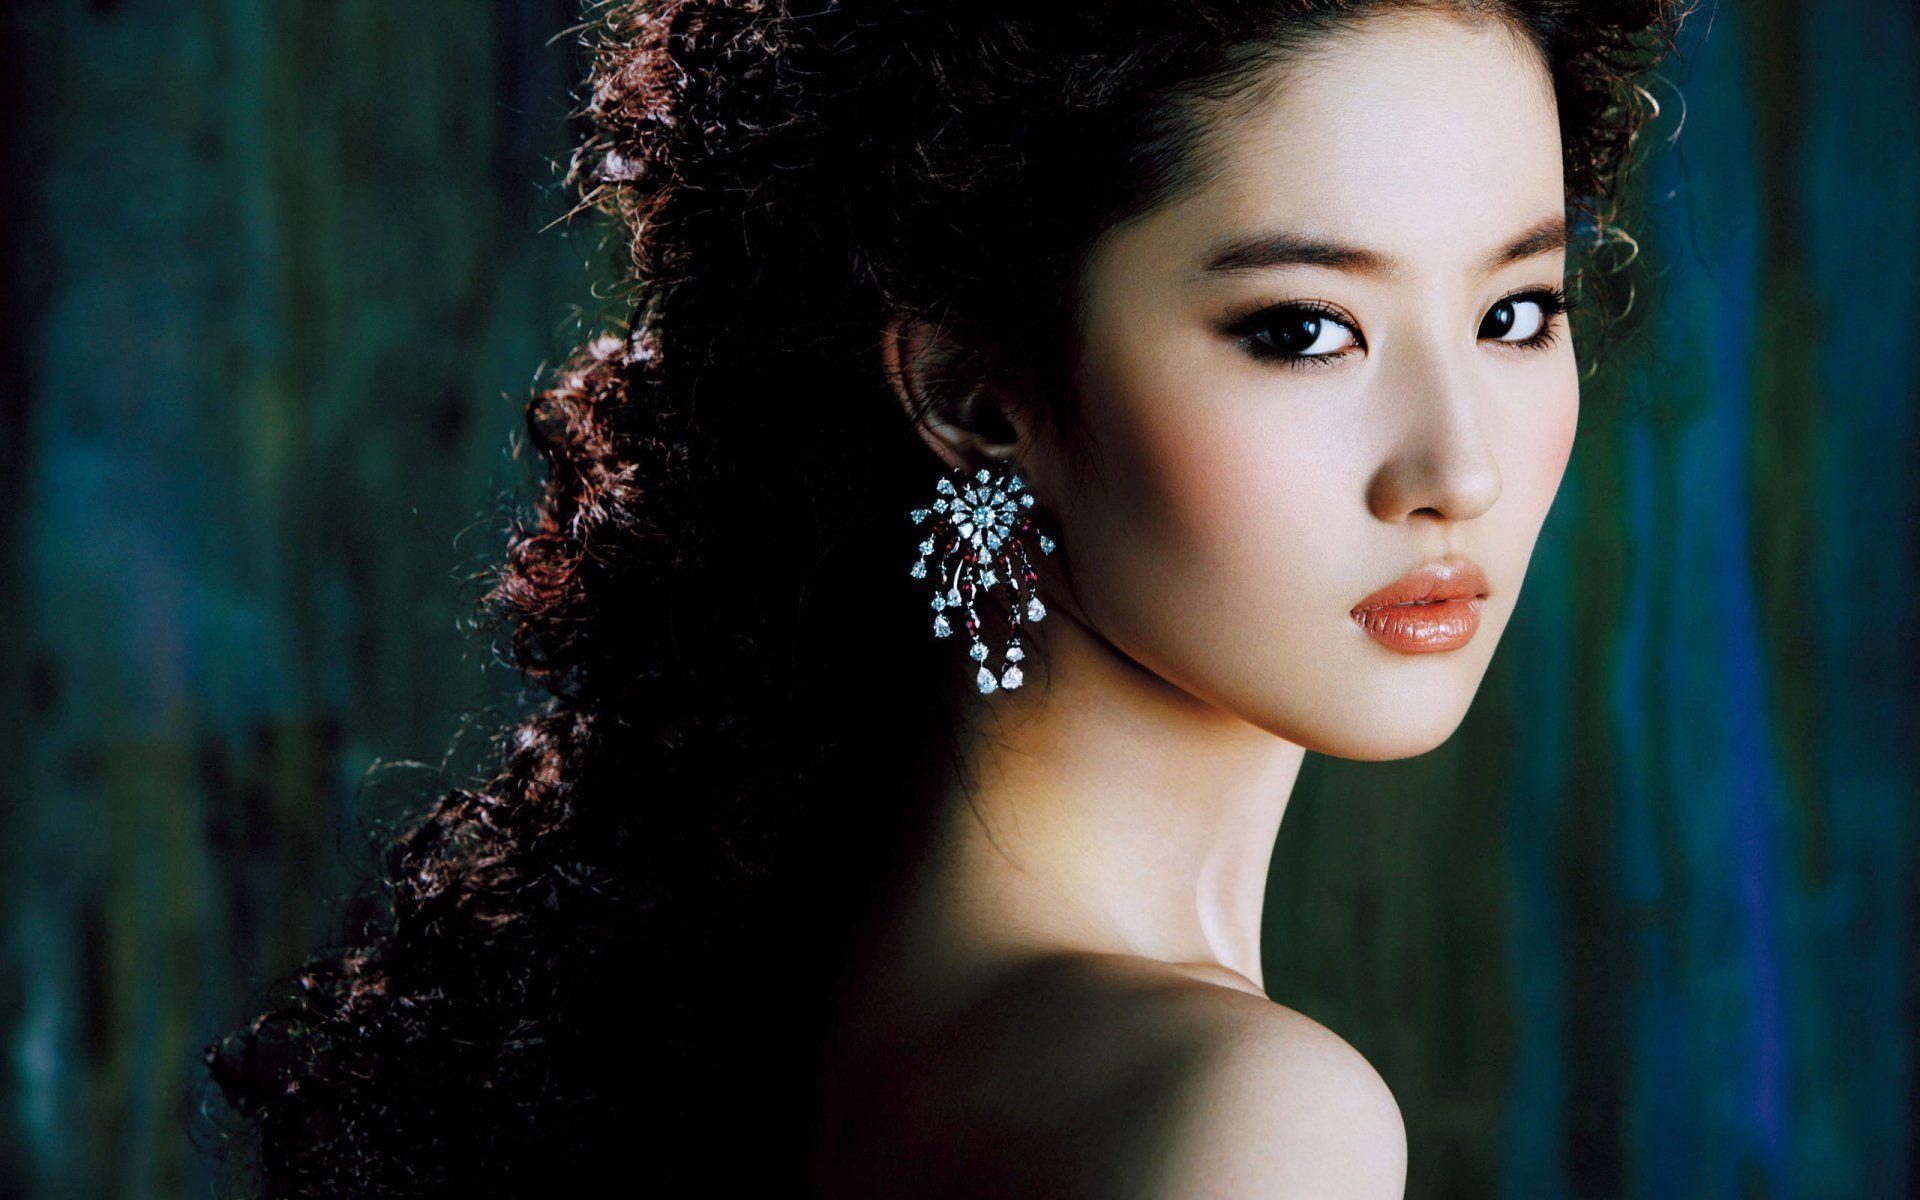 Chinese Actress Jing Tian Wallpapers